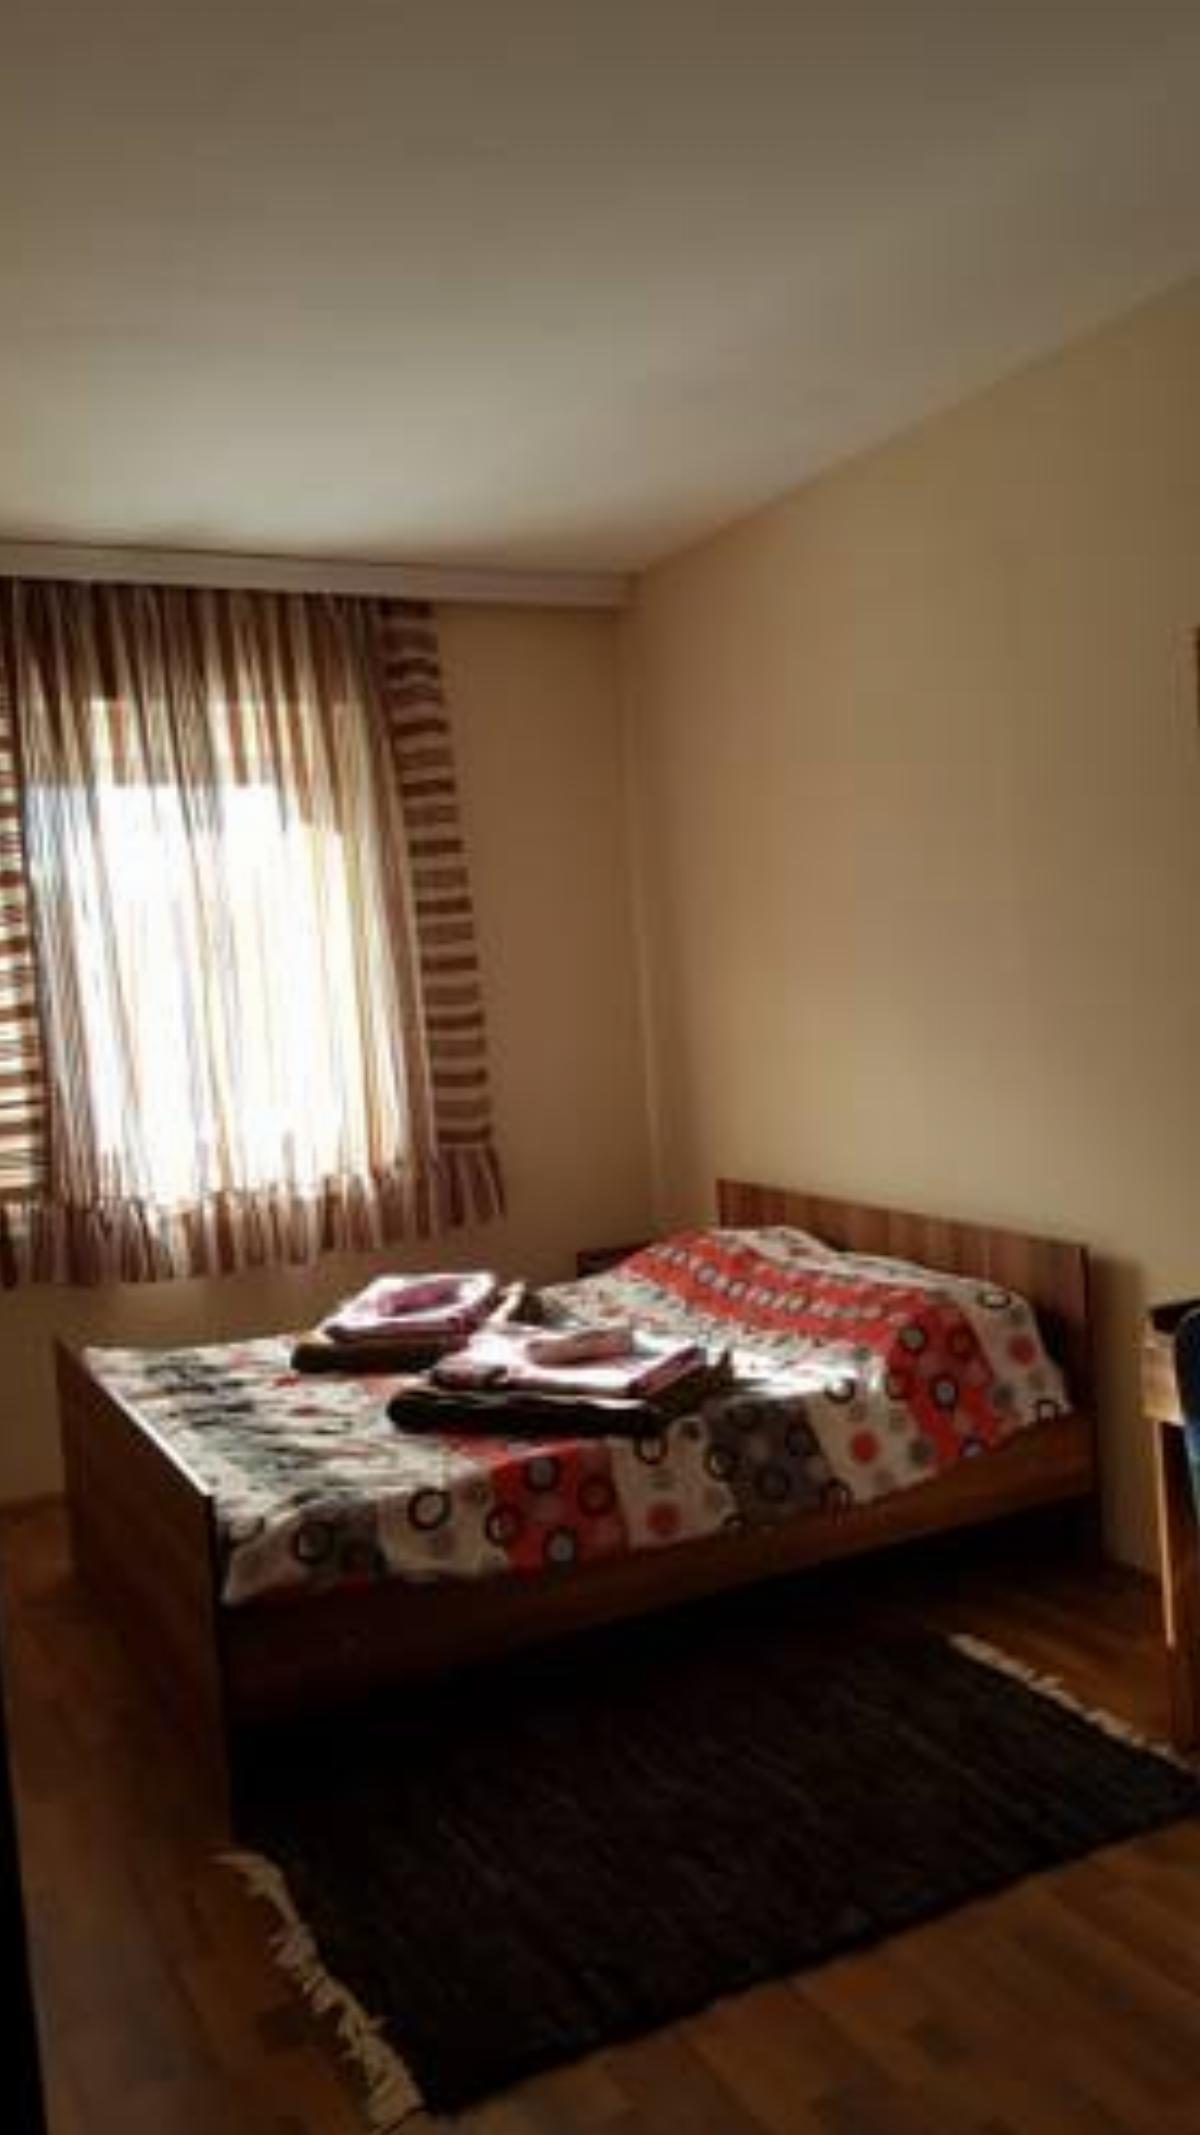 Hostel Trnovski Vetar Hotel Kriva Palanka Macedonia